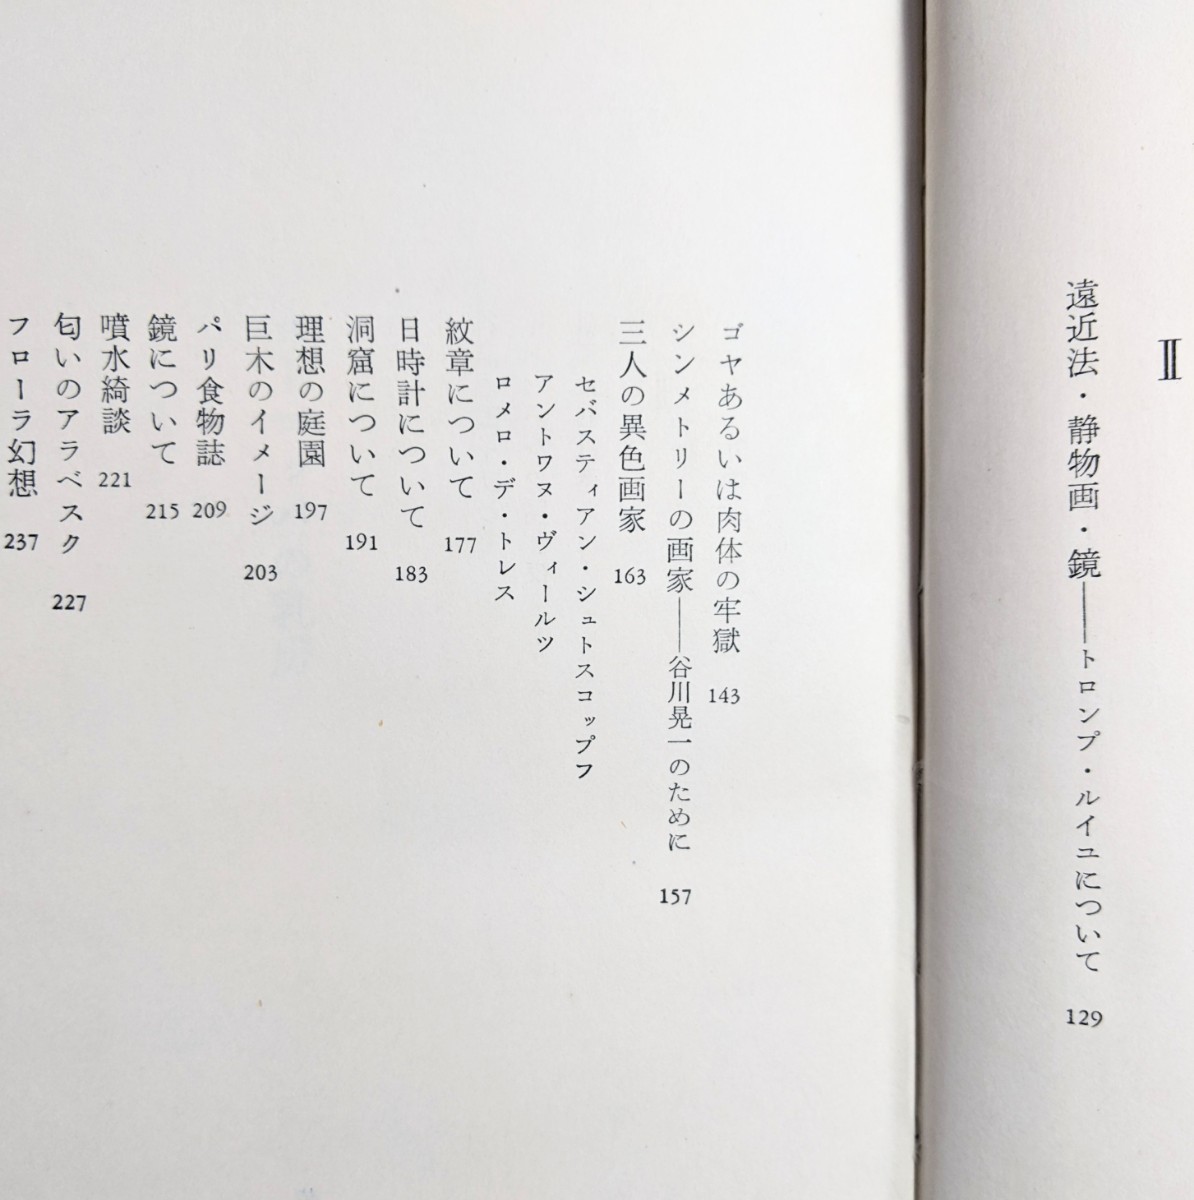  Europe. .. Shibusawa Tatsuhiko work . manner bookstore the first version 1973 year 